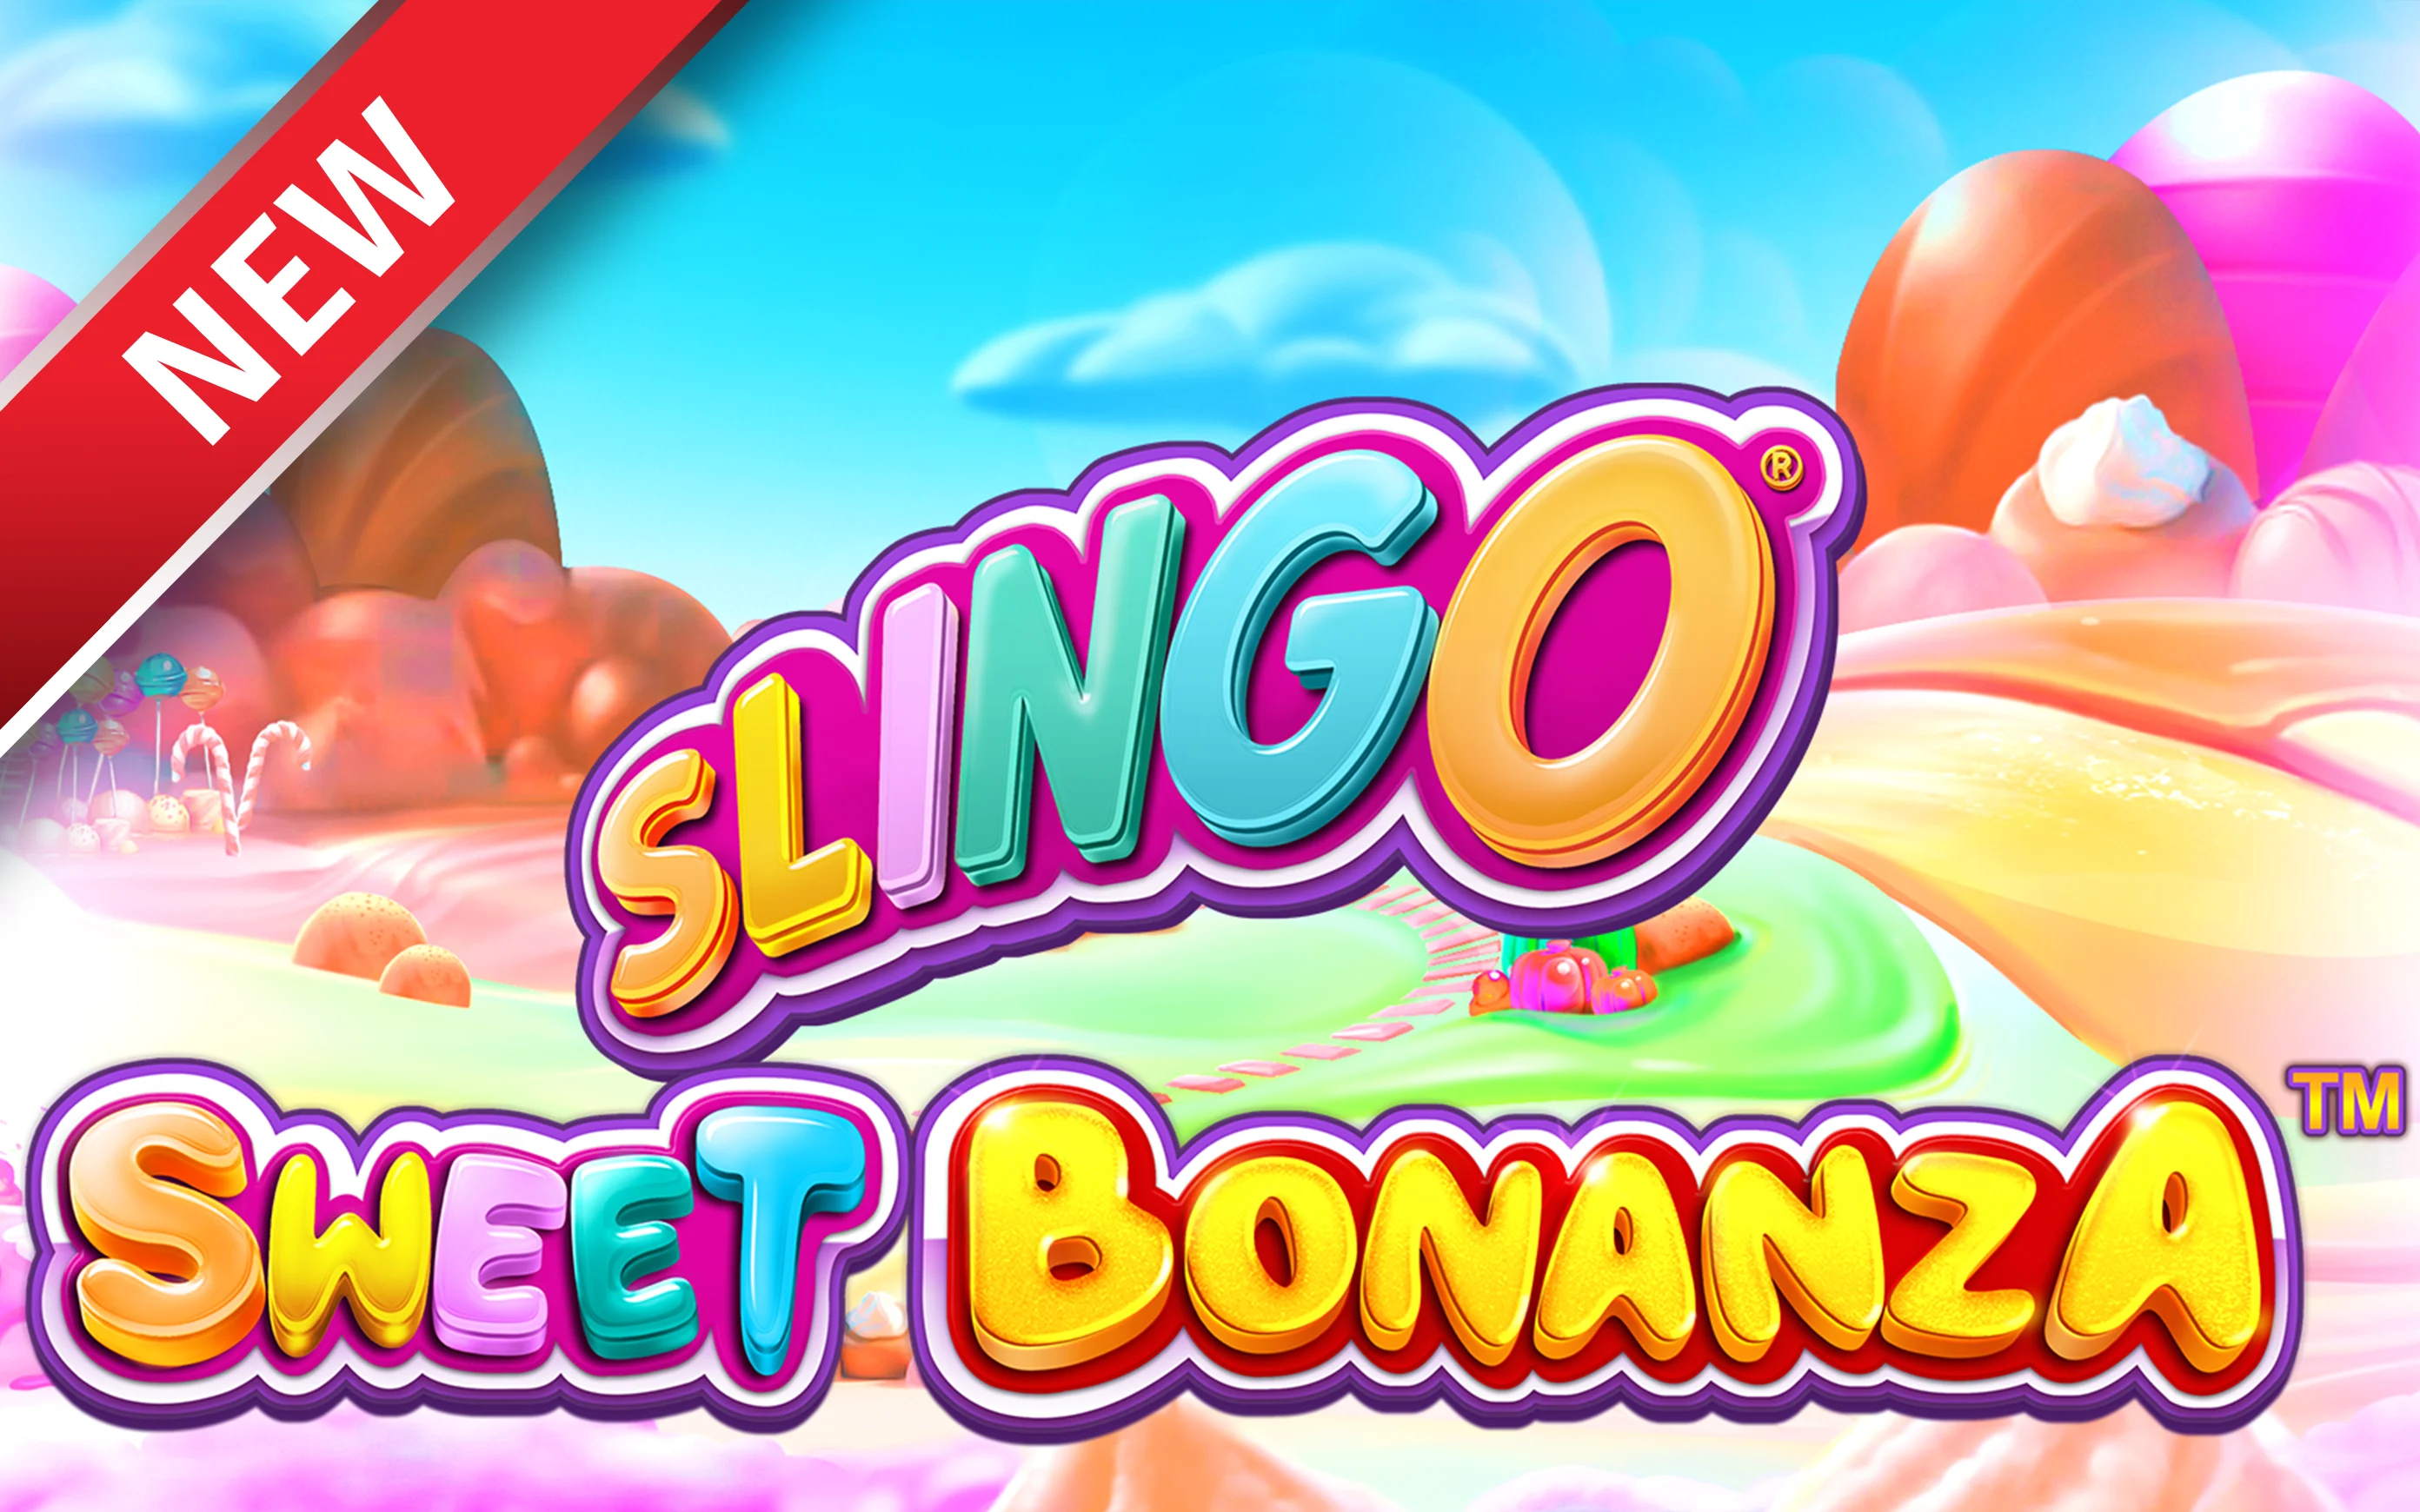 Play Slingo Sweet Bonanza on Starcasino.be online casino